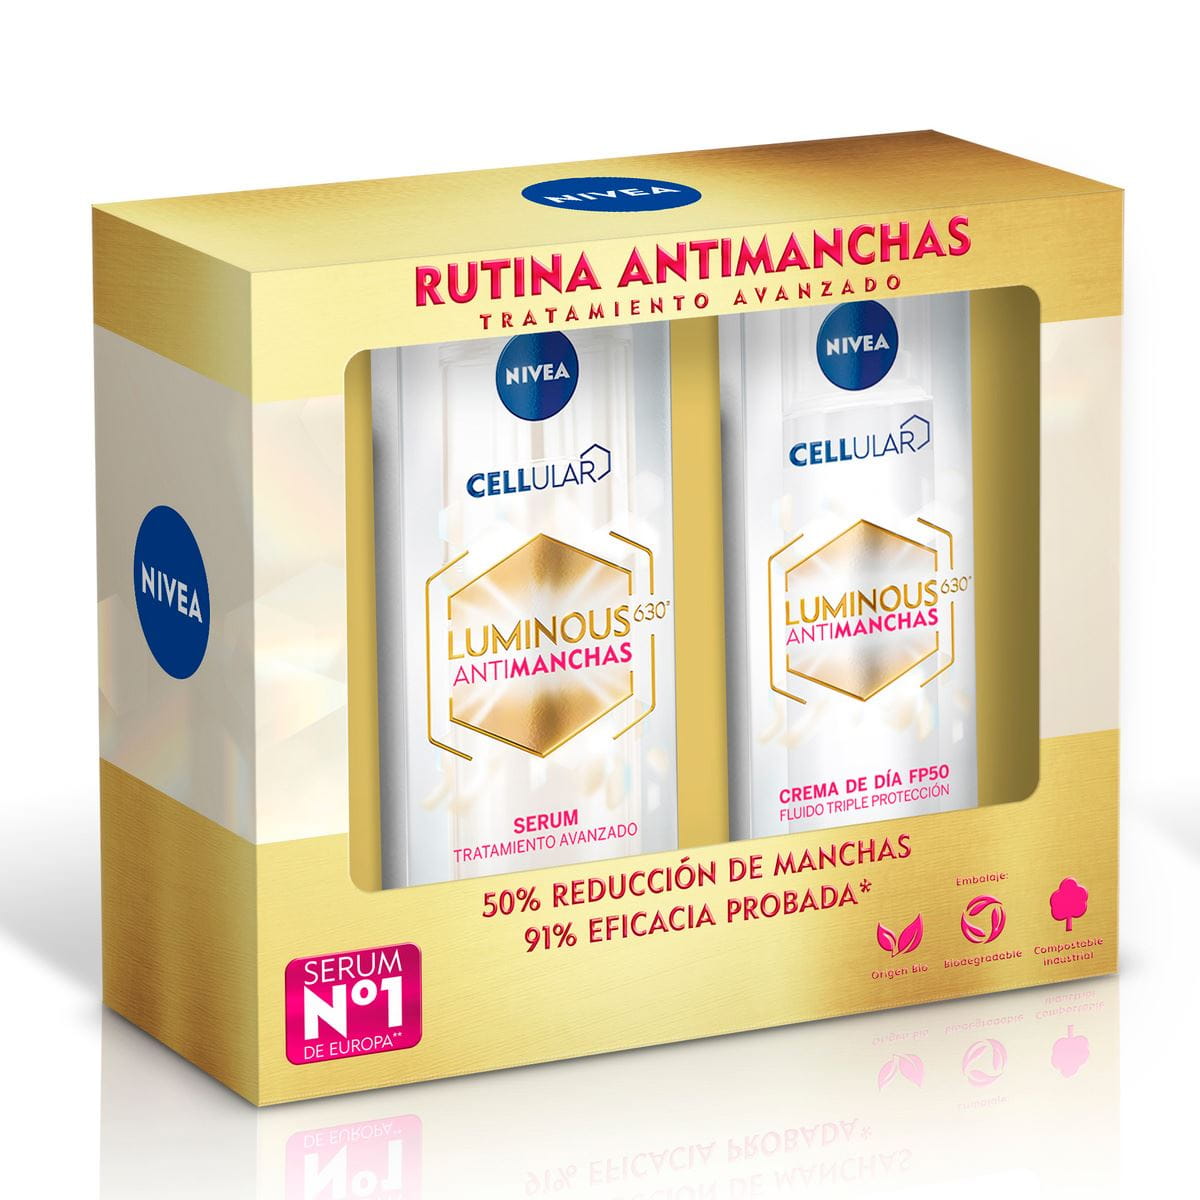 NIVEA Pack Rutina Antimanchas Luminous630